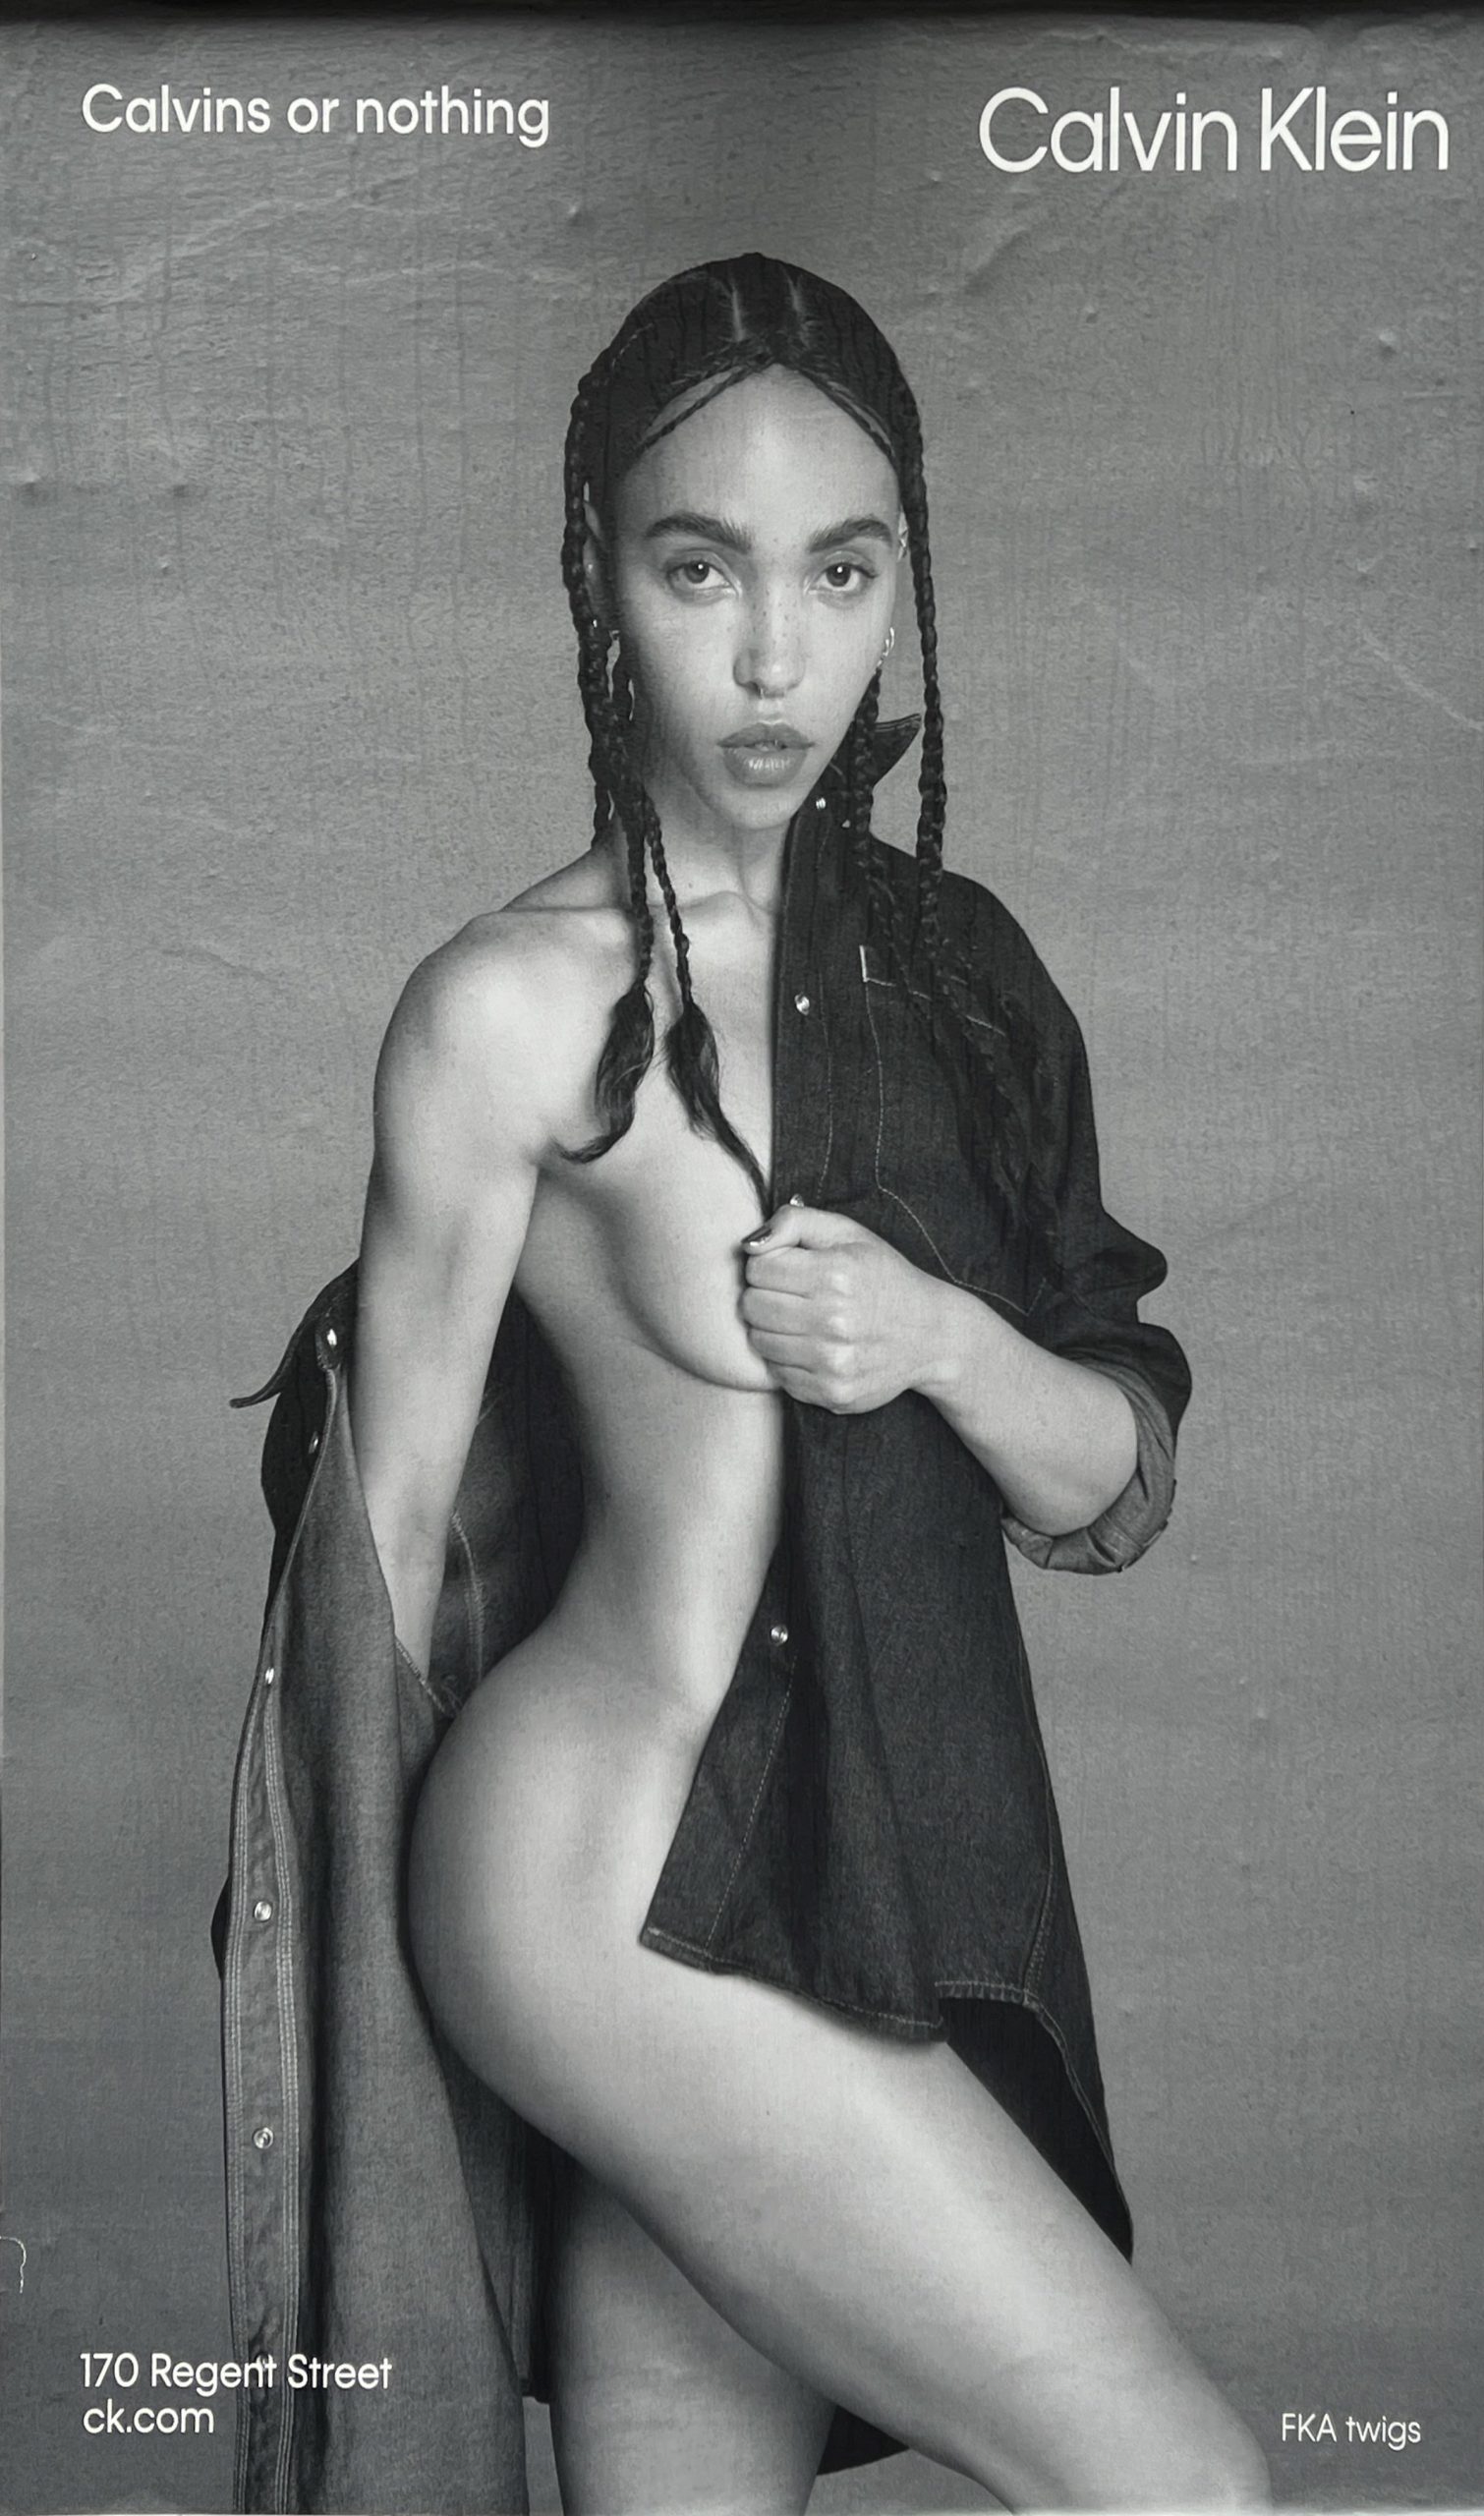 Double standards’: FKA twigs defends banned semi-nude Calvin Klein advert